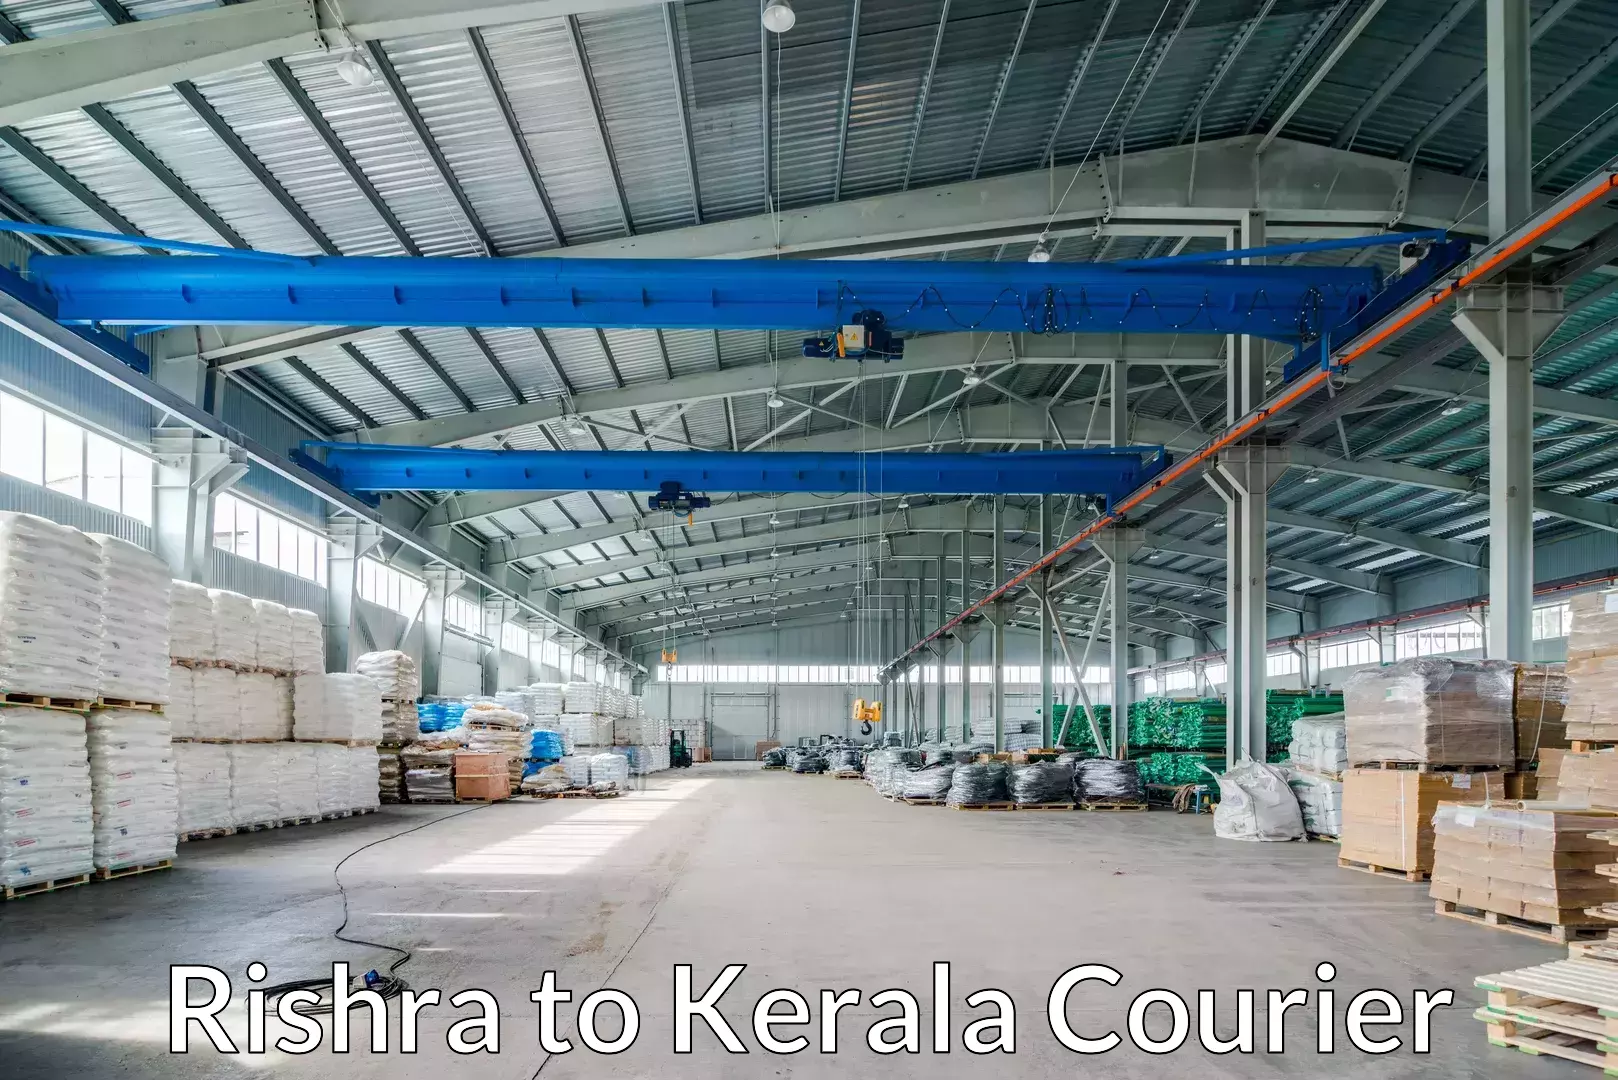 Luggage shipment specialists Rishra to Kerala